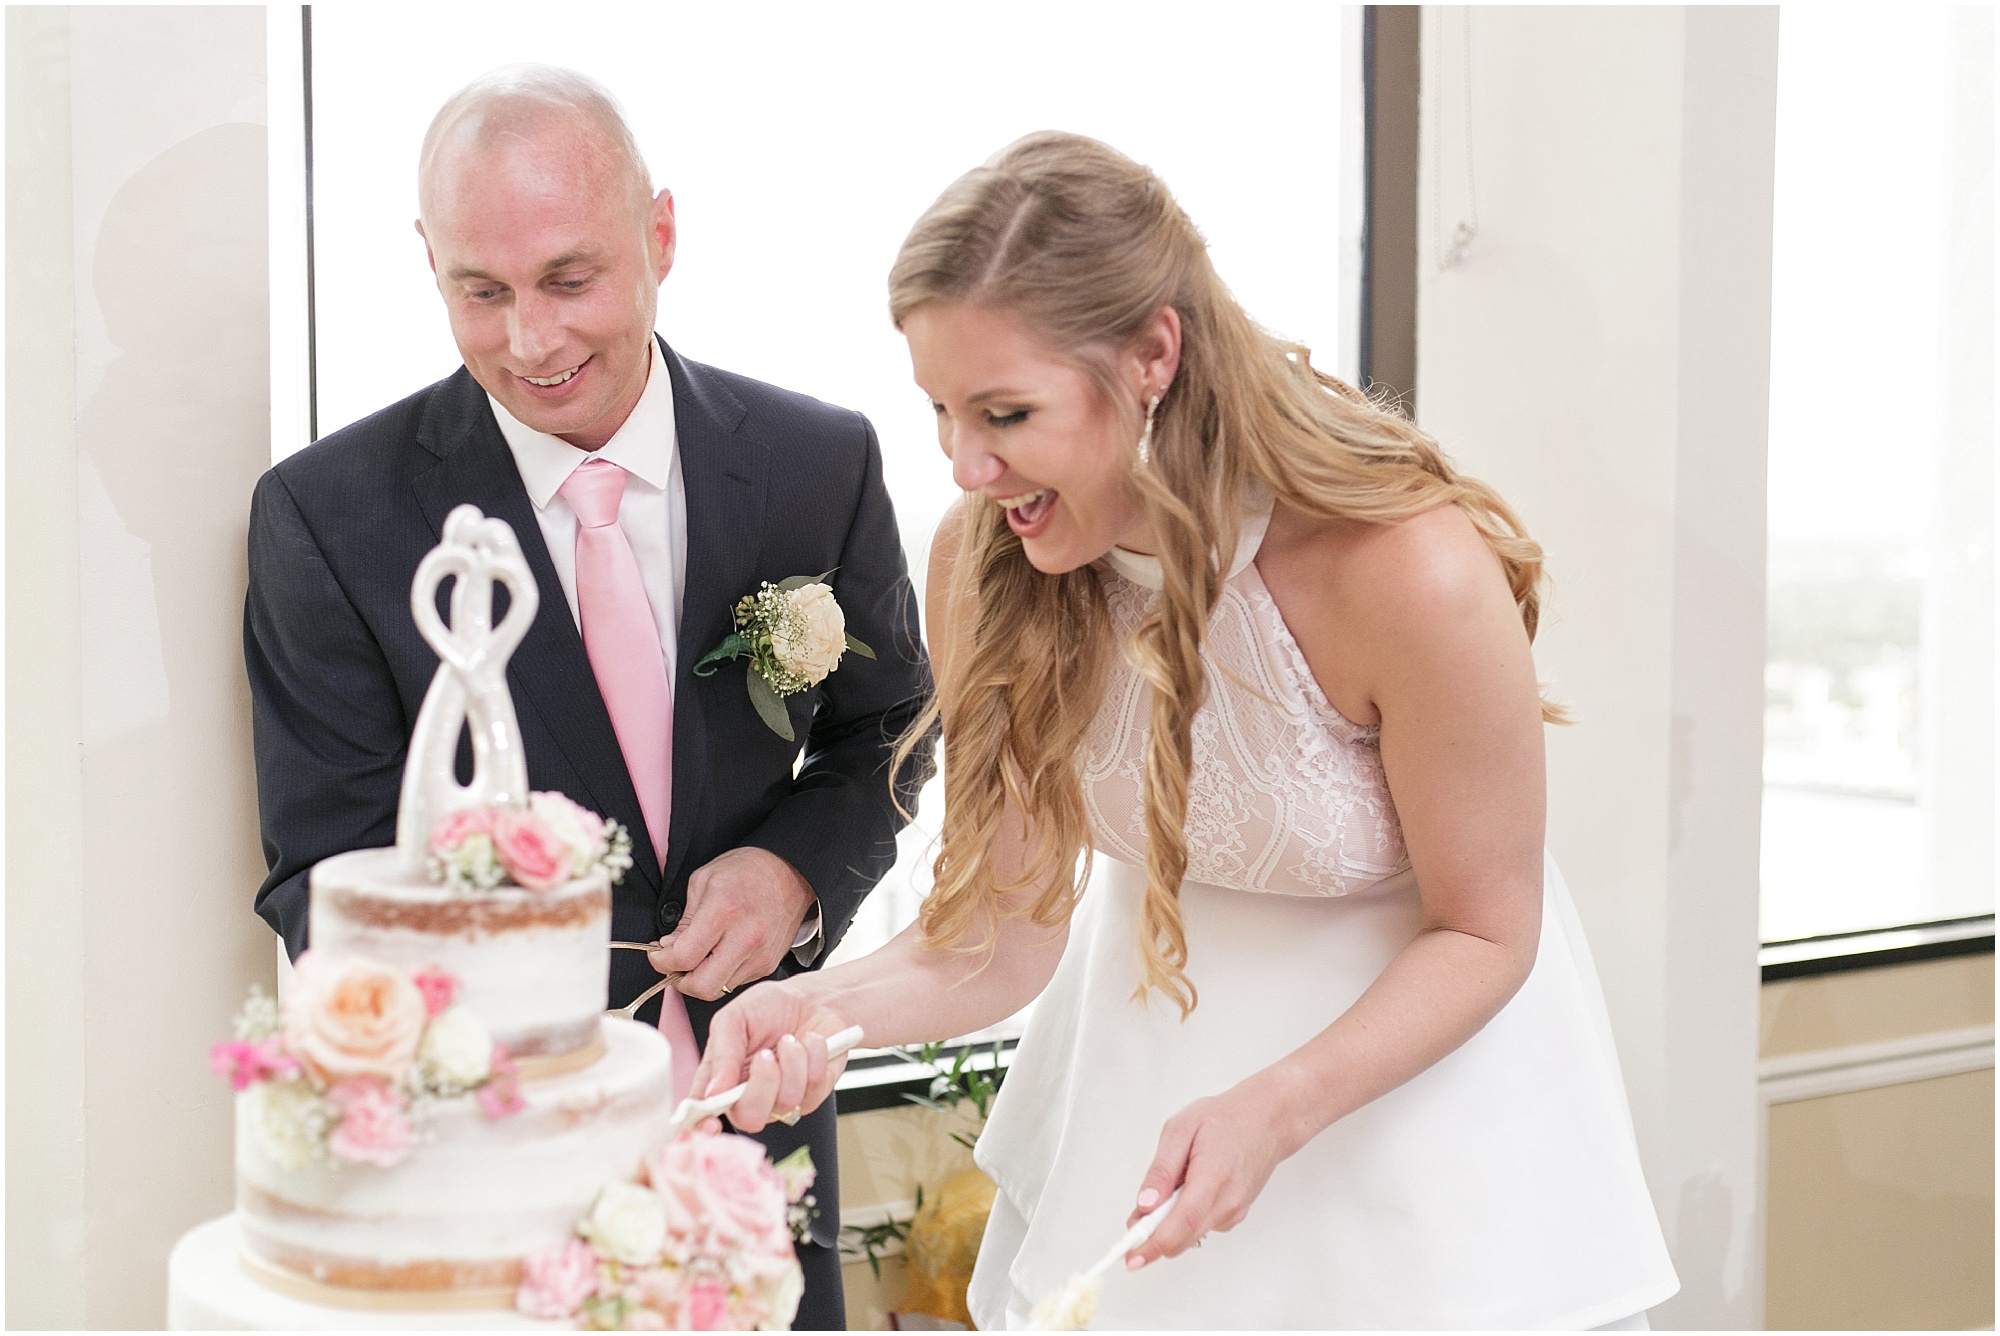 Bride and groom slice their wedding cake. 